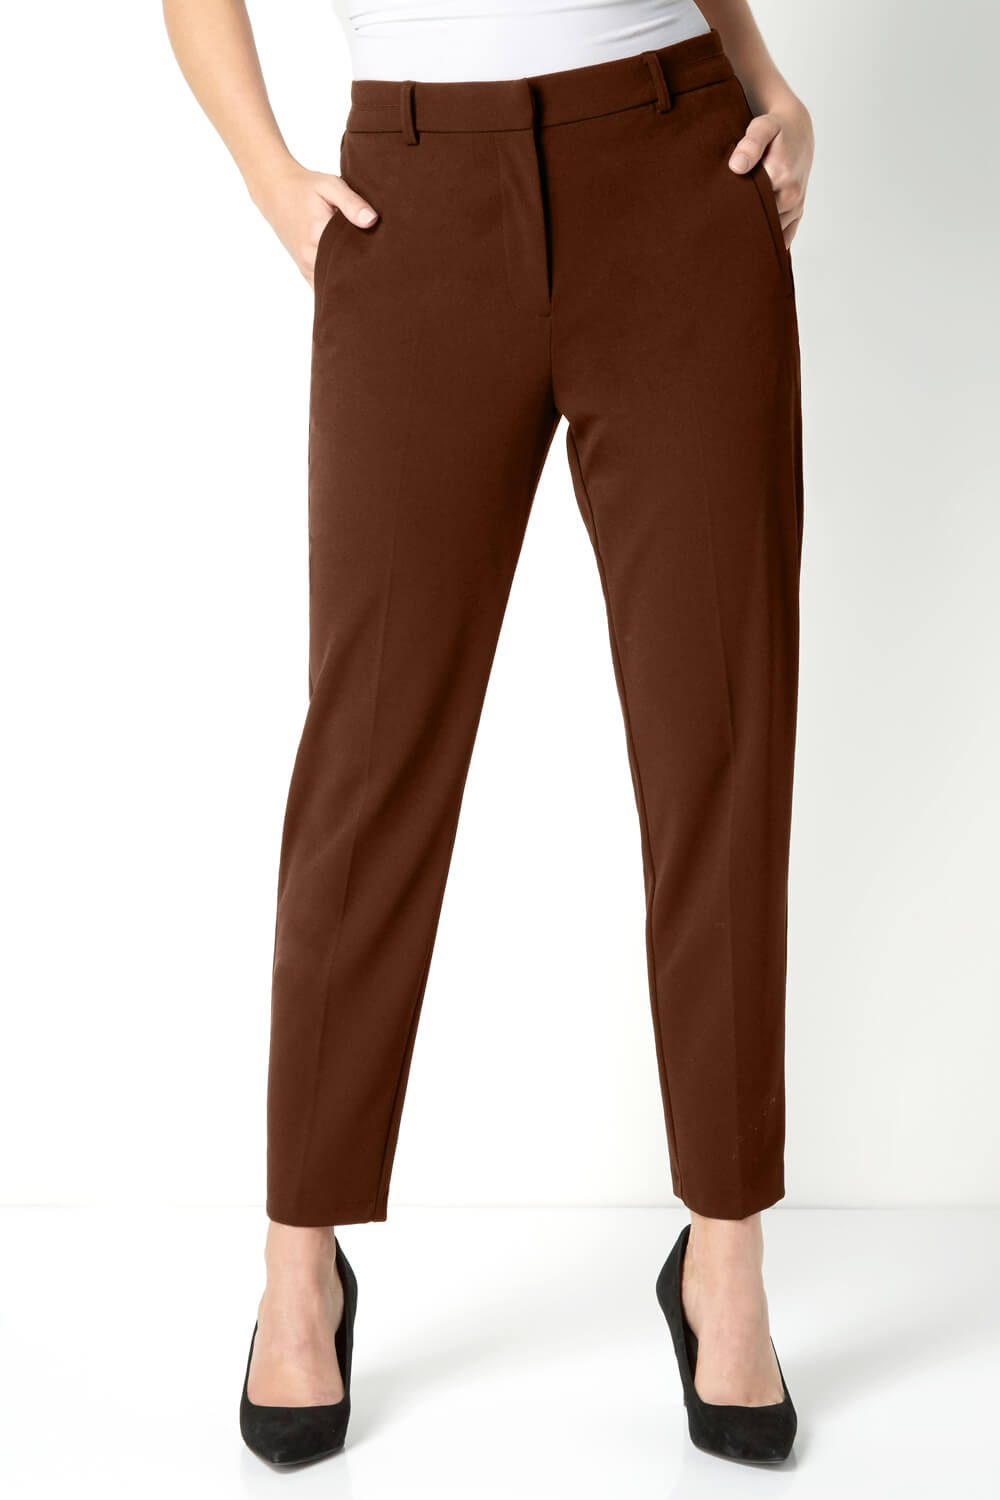 Tan Brown Trousers - Buy Tan Brown Trousers online in India